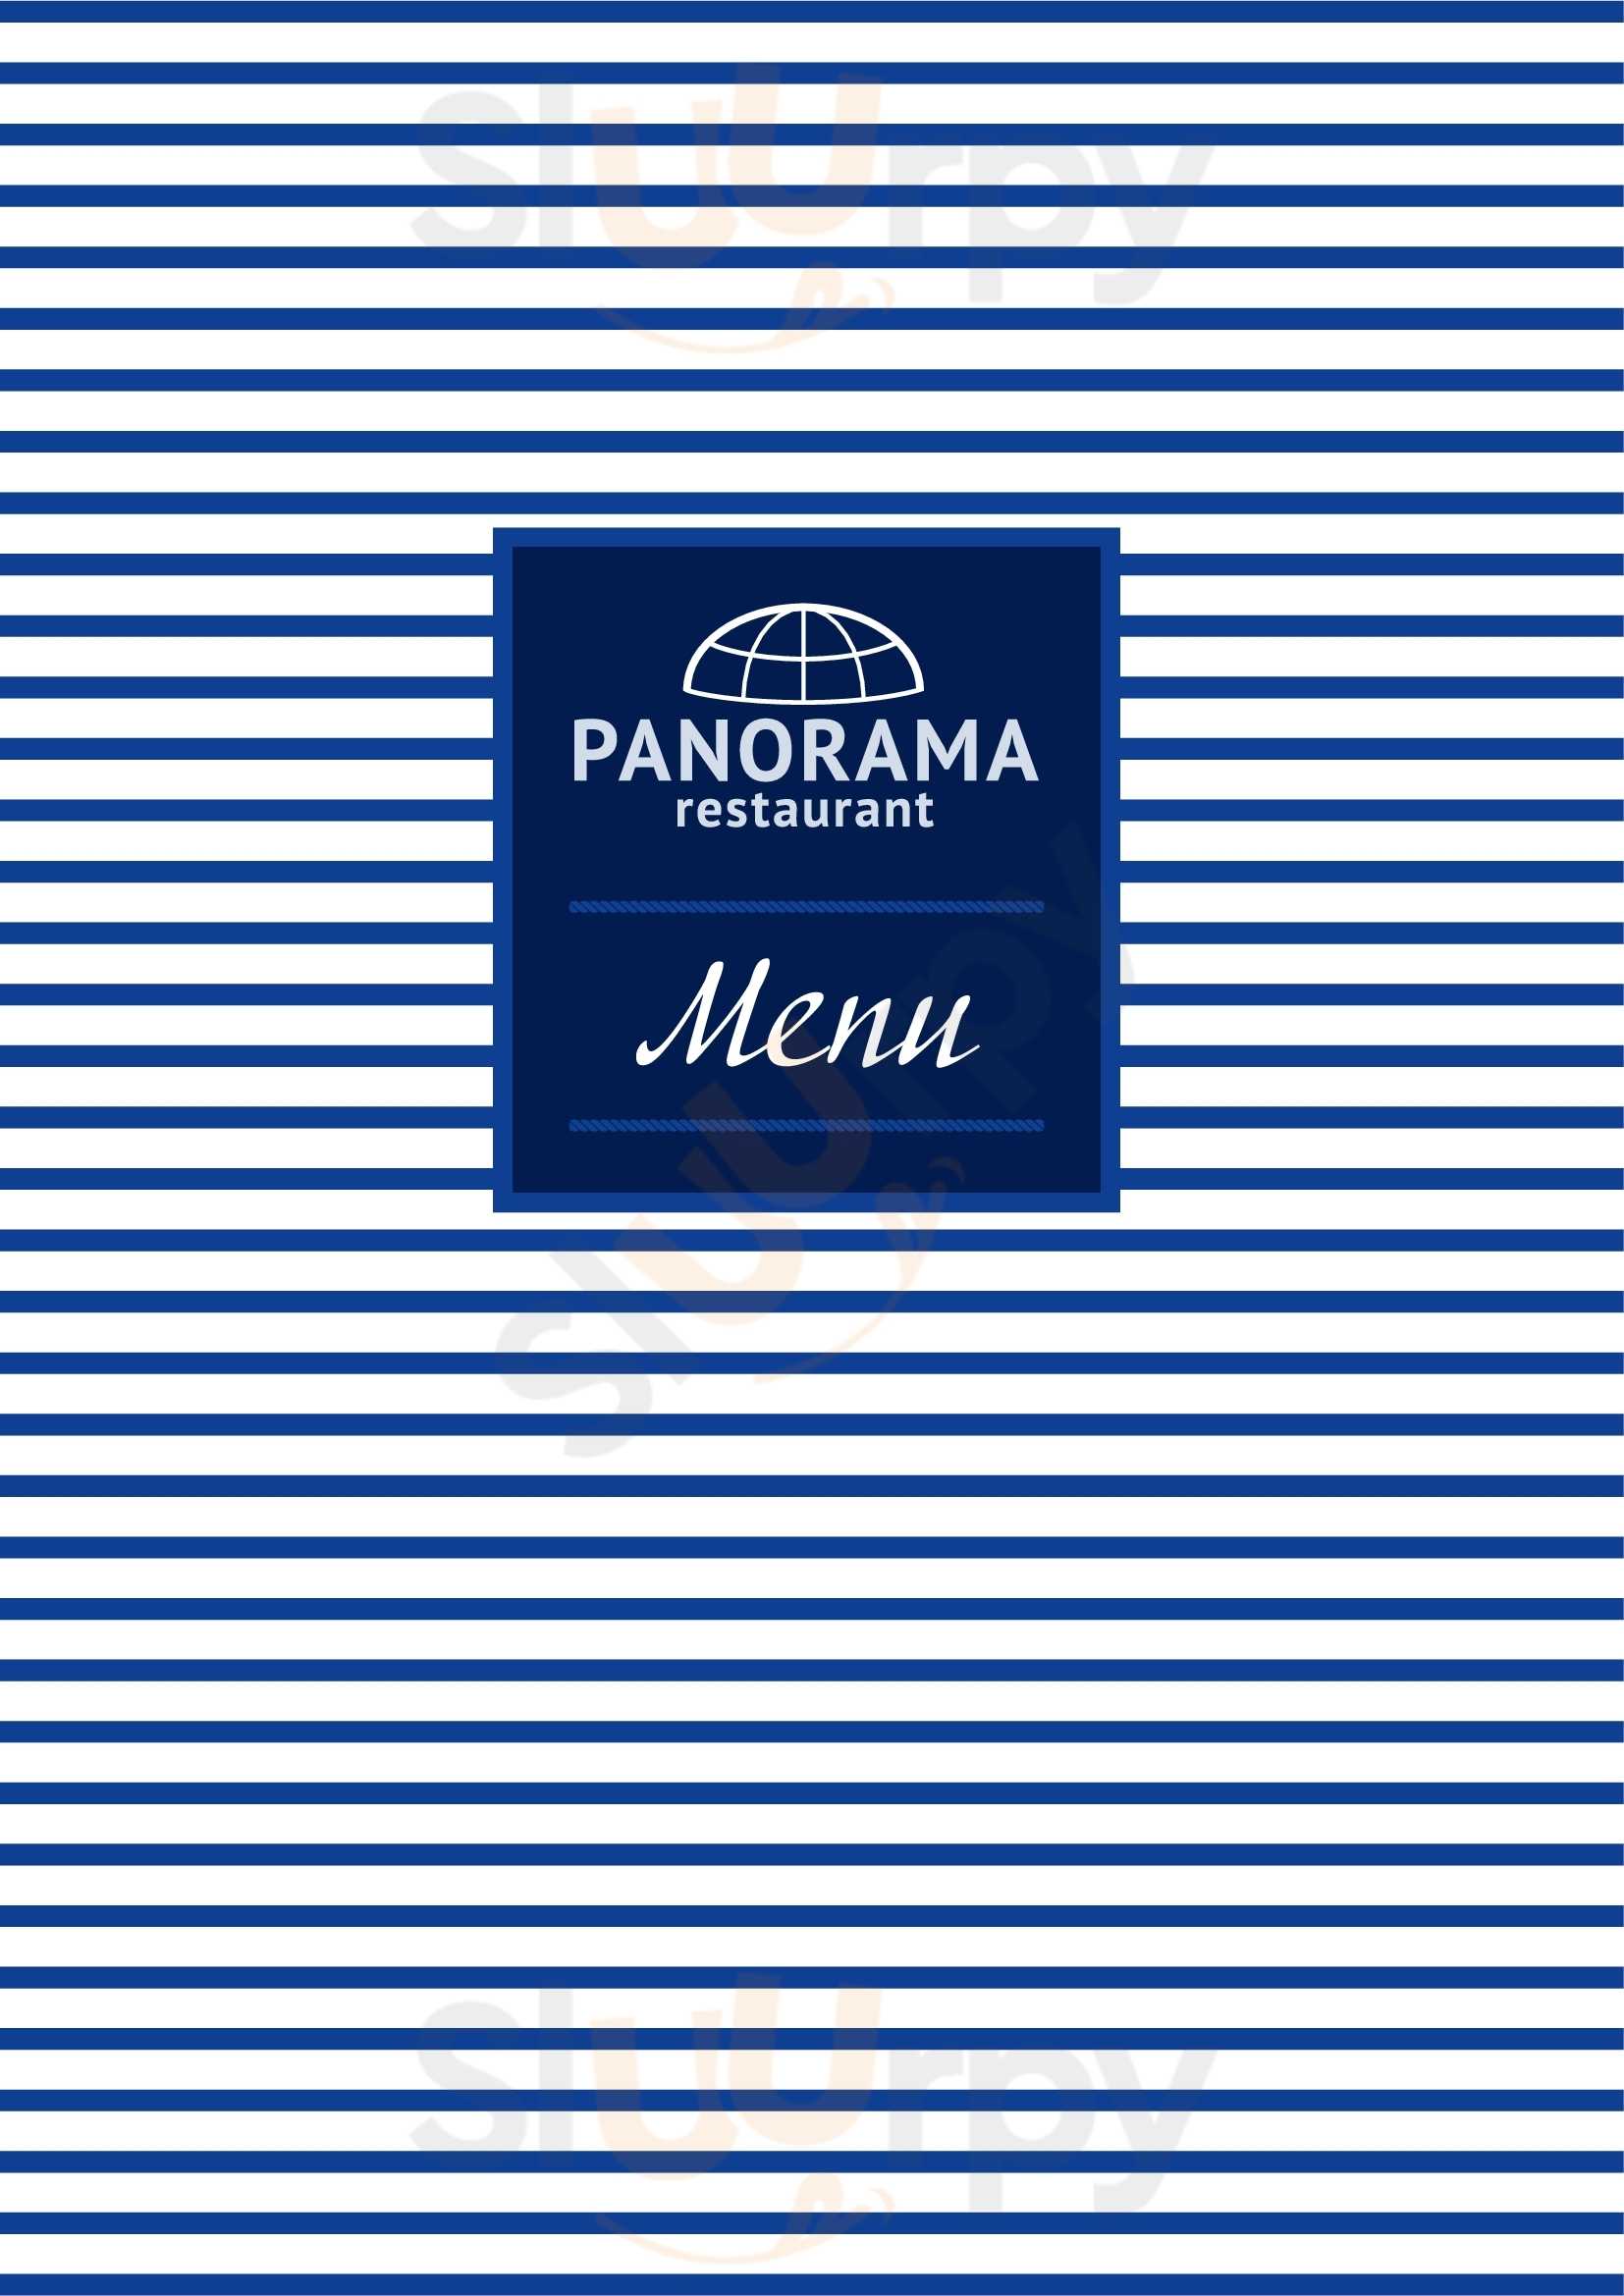 Panorama & Piano Bar Odessa Menu - 1